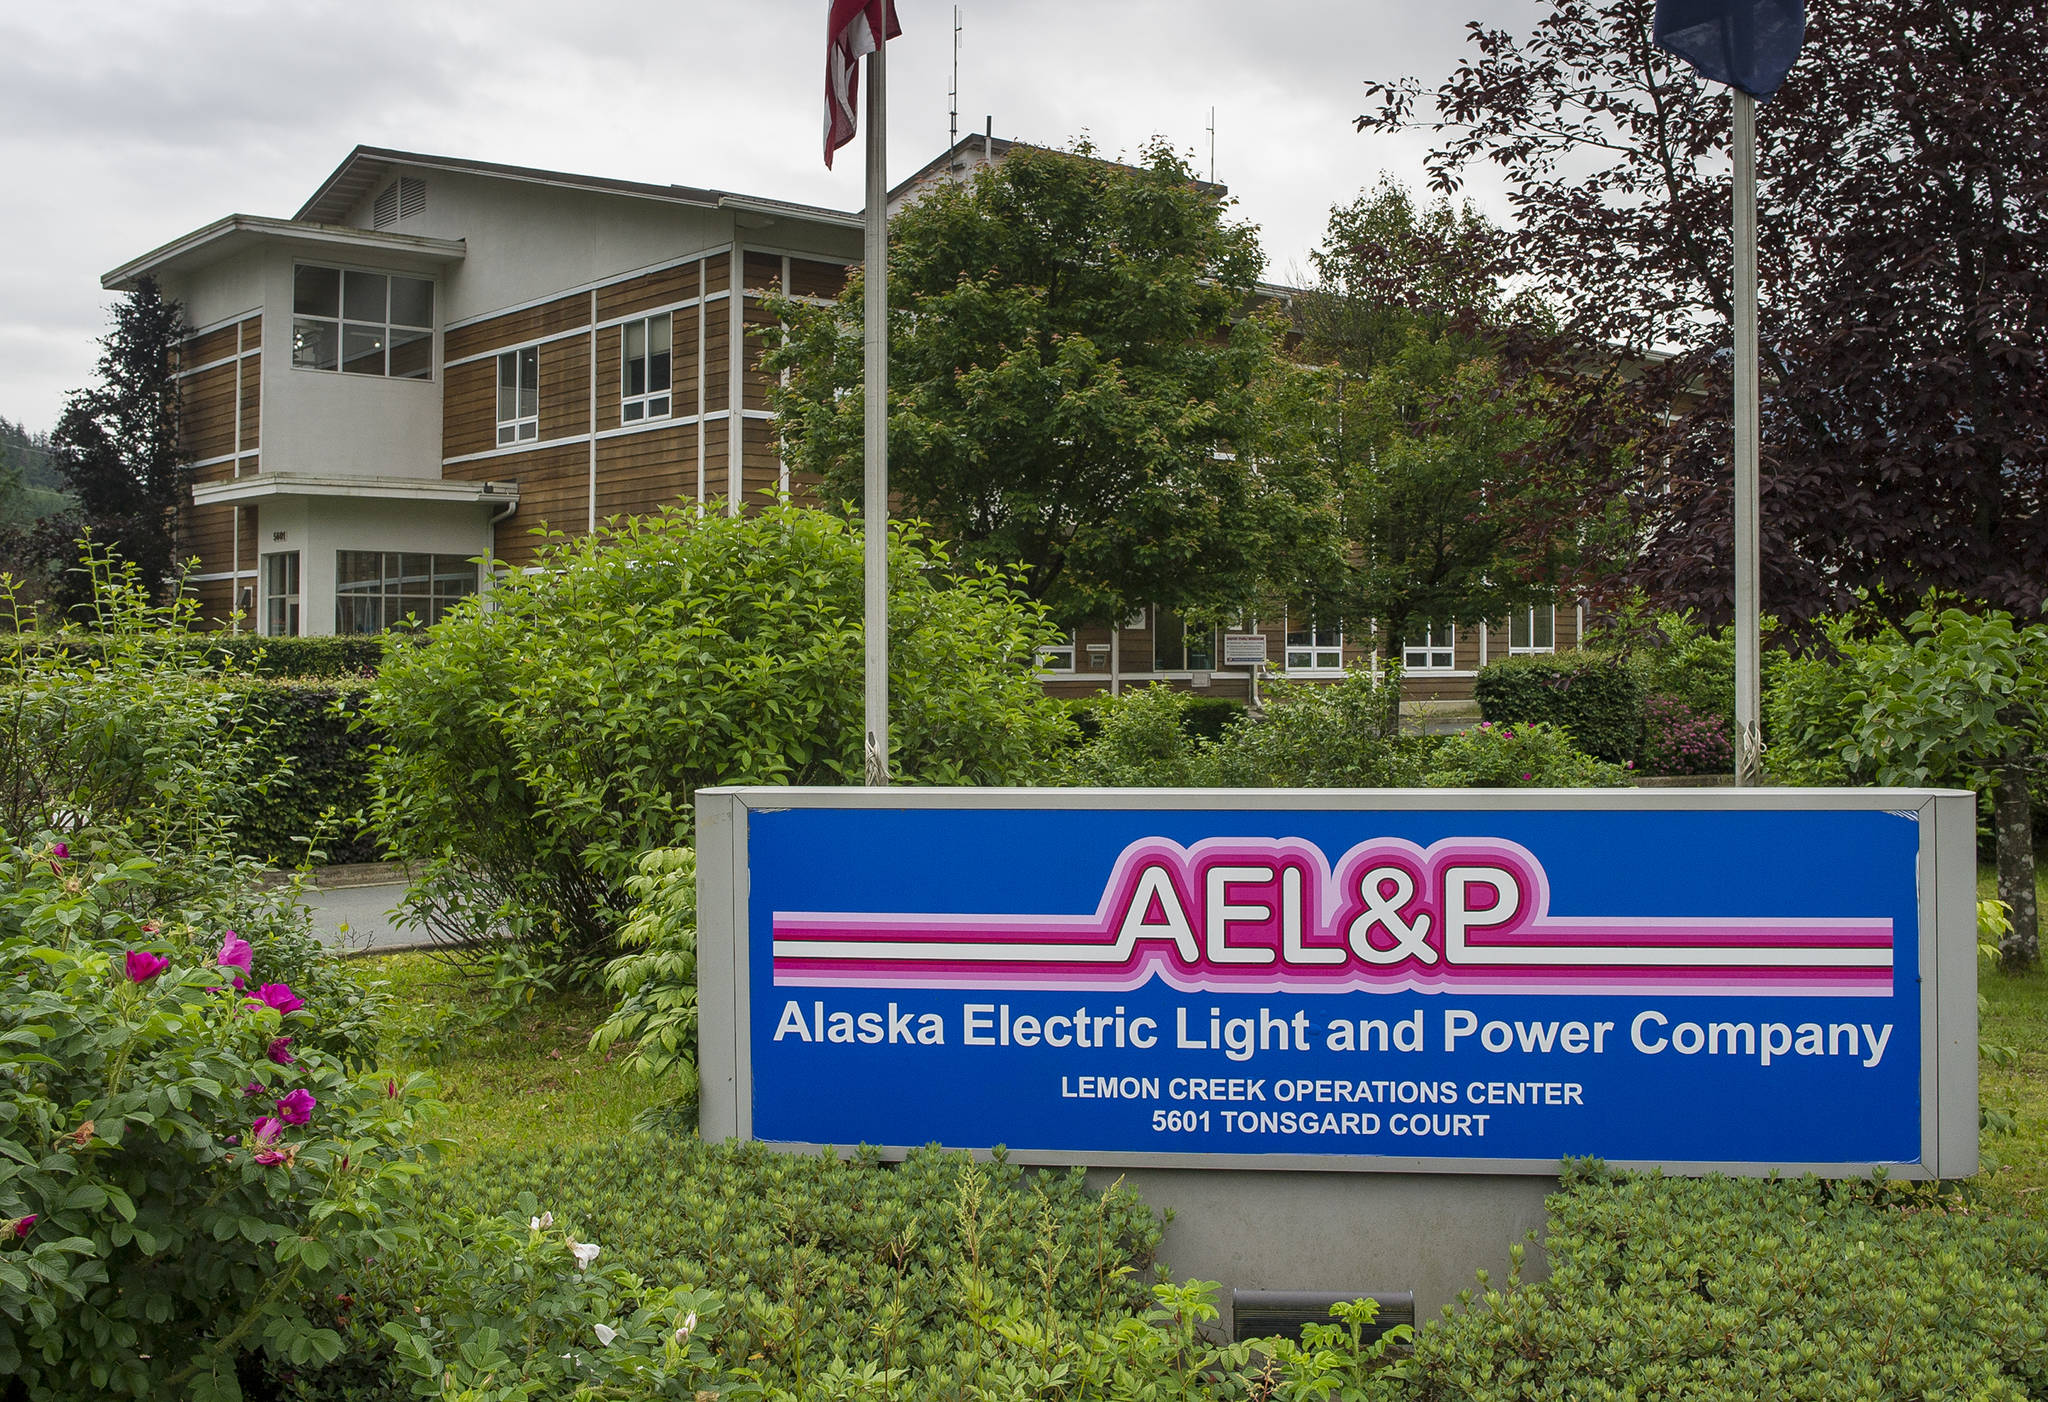 Alaska Electric Light and Power Company Lemon Creek operations center in Juneau on Wednesday, July 19, 2017. (Michael Penn | Juneau Empire File)